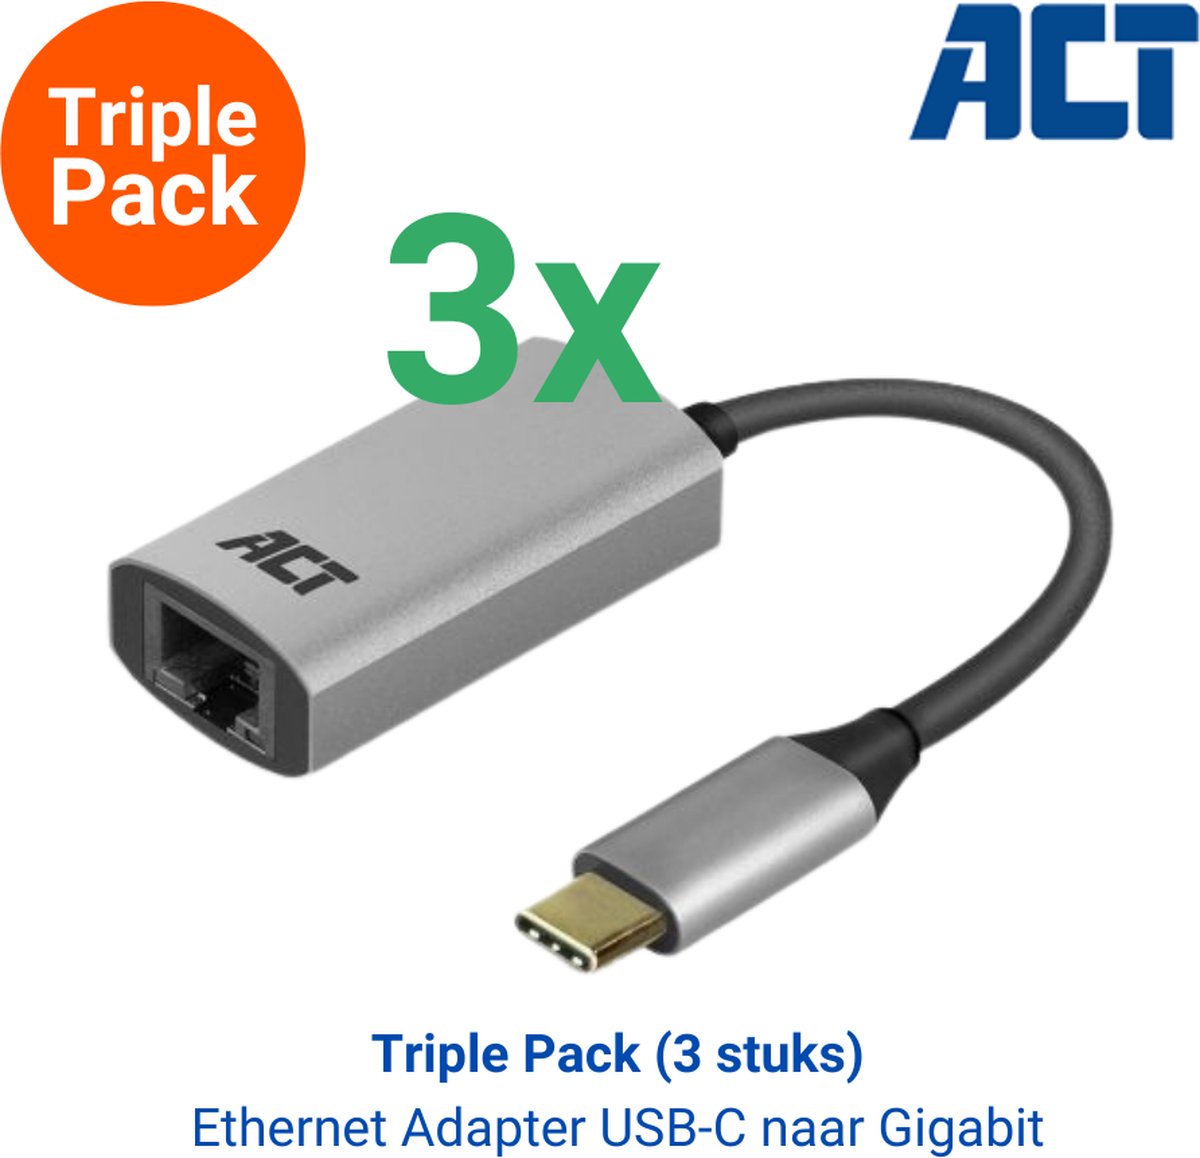 Tripple Pack: 3x AC7080 Ethernet Adapter USB-C naar Gigabit